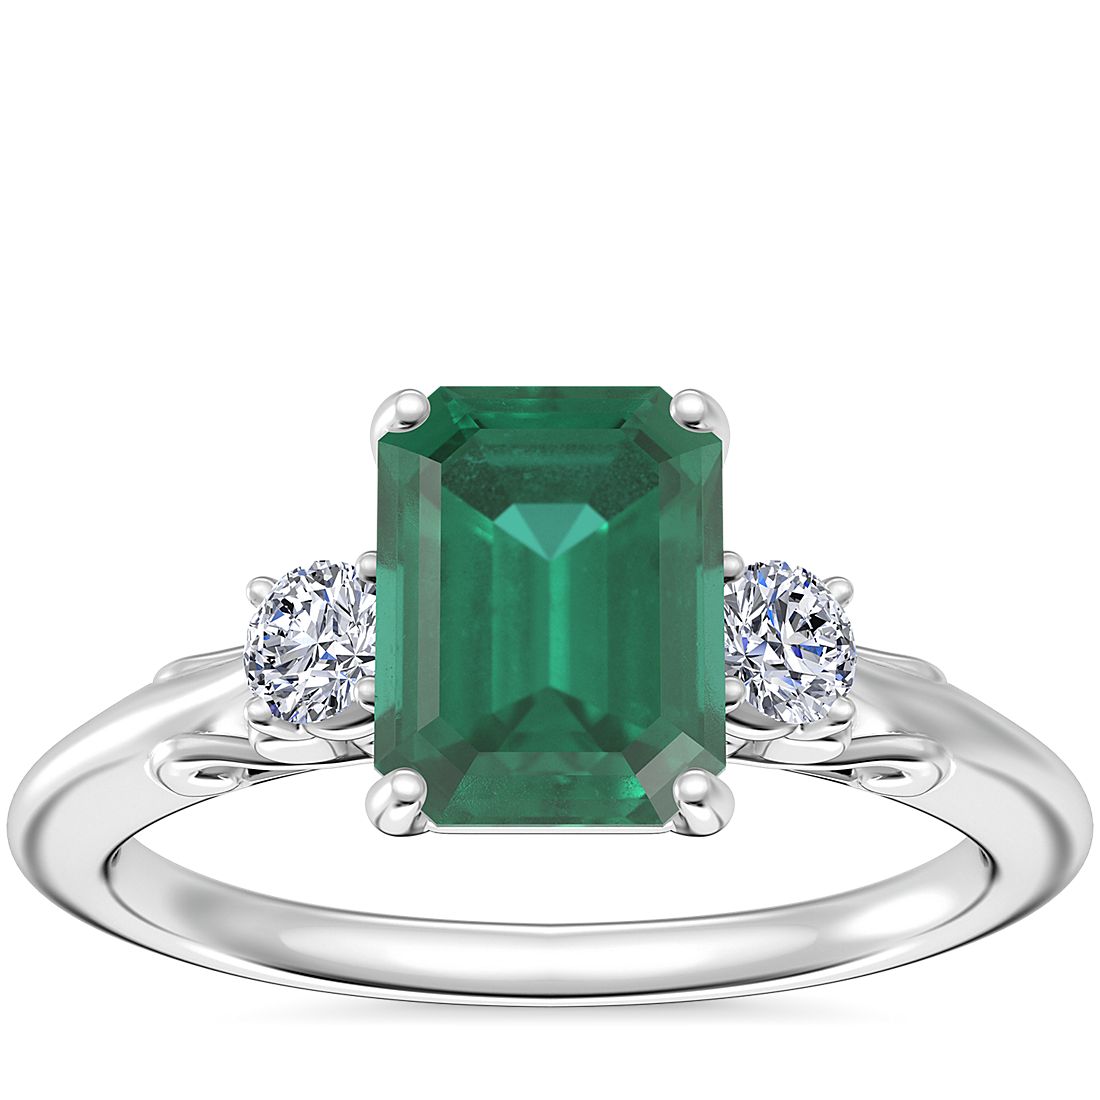 Slank voetstappen Tegen de wil Vintage Three Stone Engagement Ring with Emerald-Cut Emerald in Platinum  (8x6mm) | Blue Nile